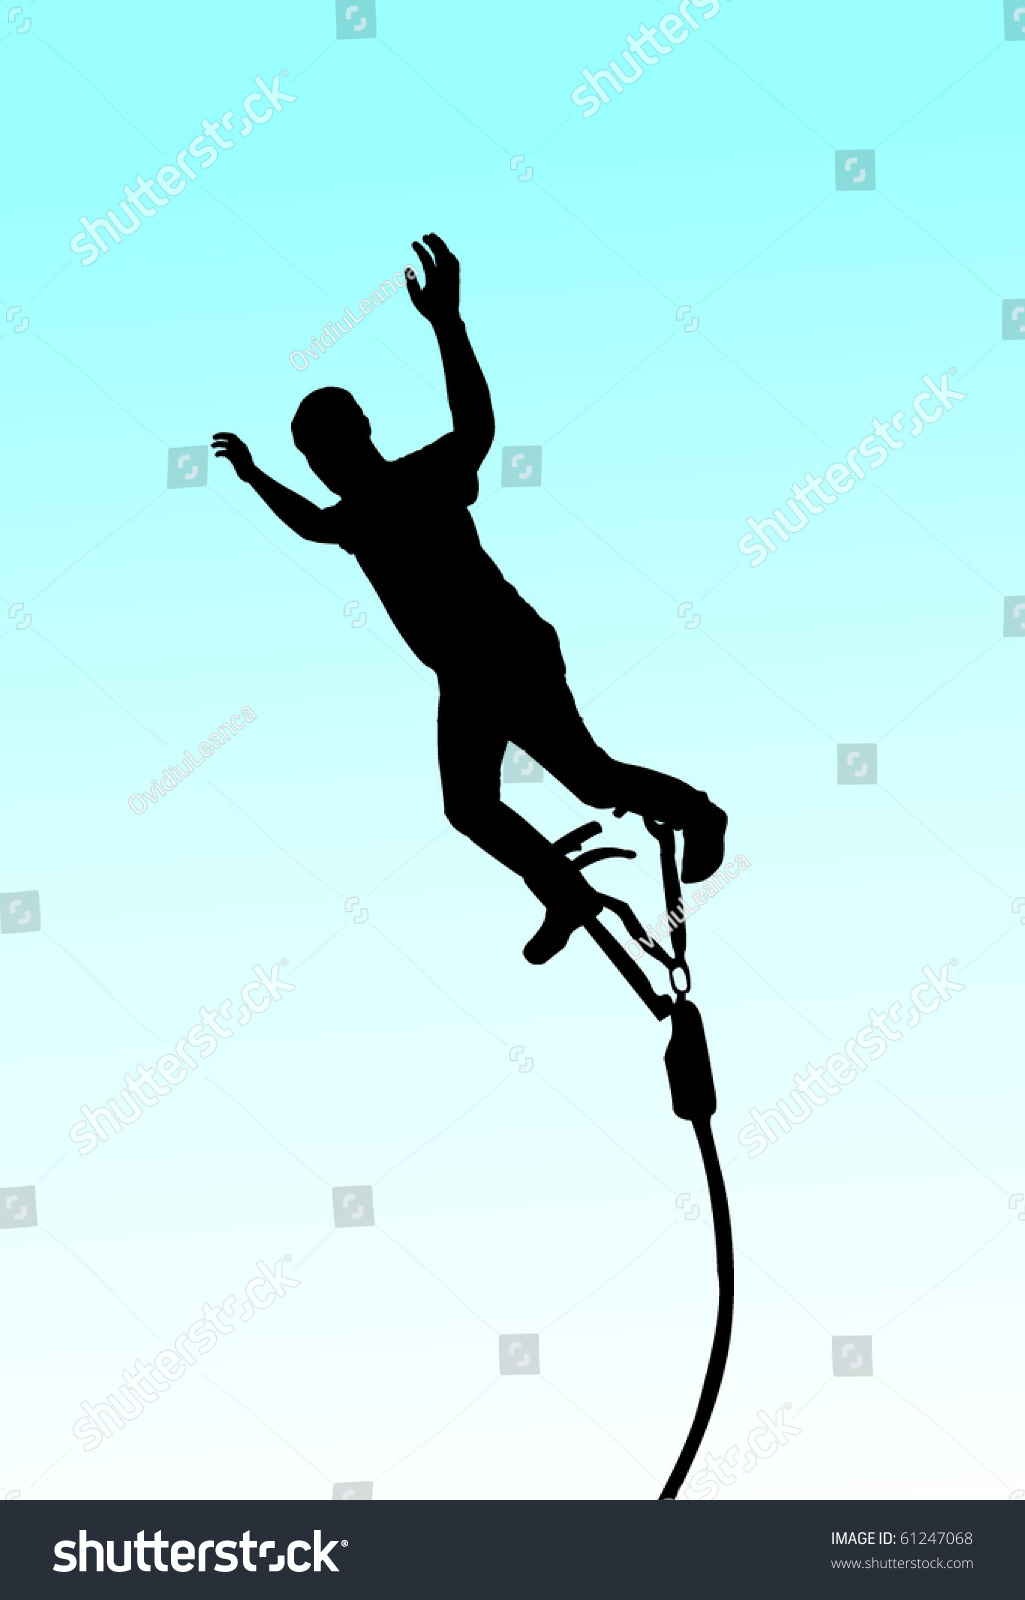 Bungee Jumping 1 Stock Vector Illustration 61247068 : Shutterstock